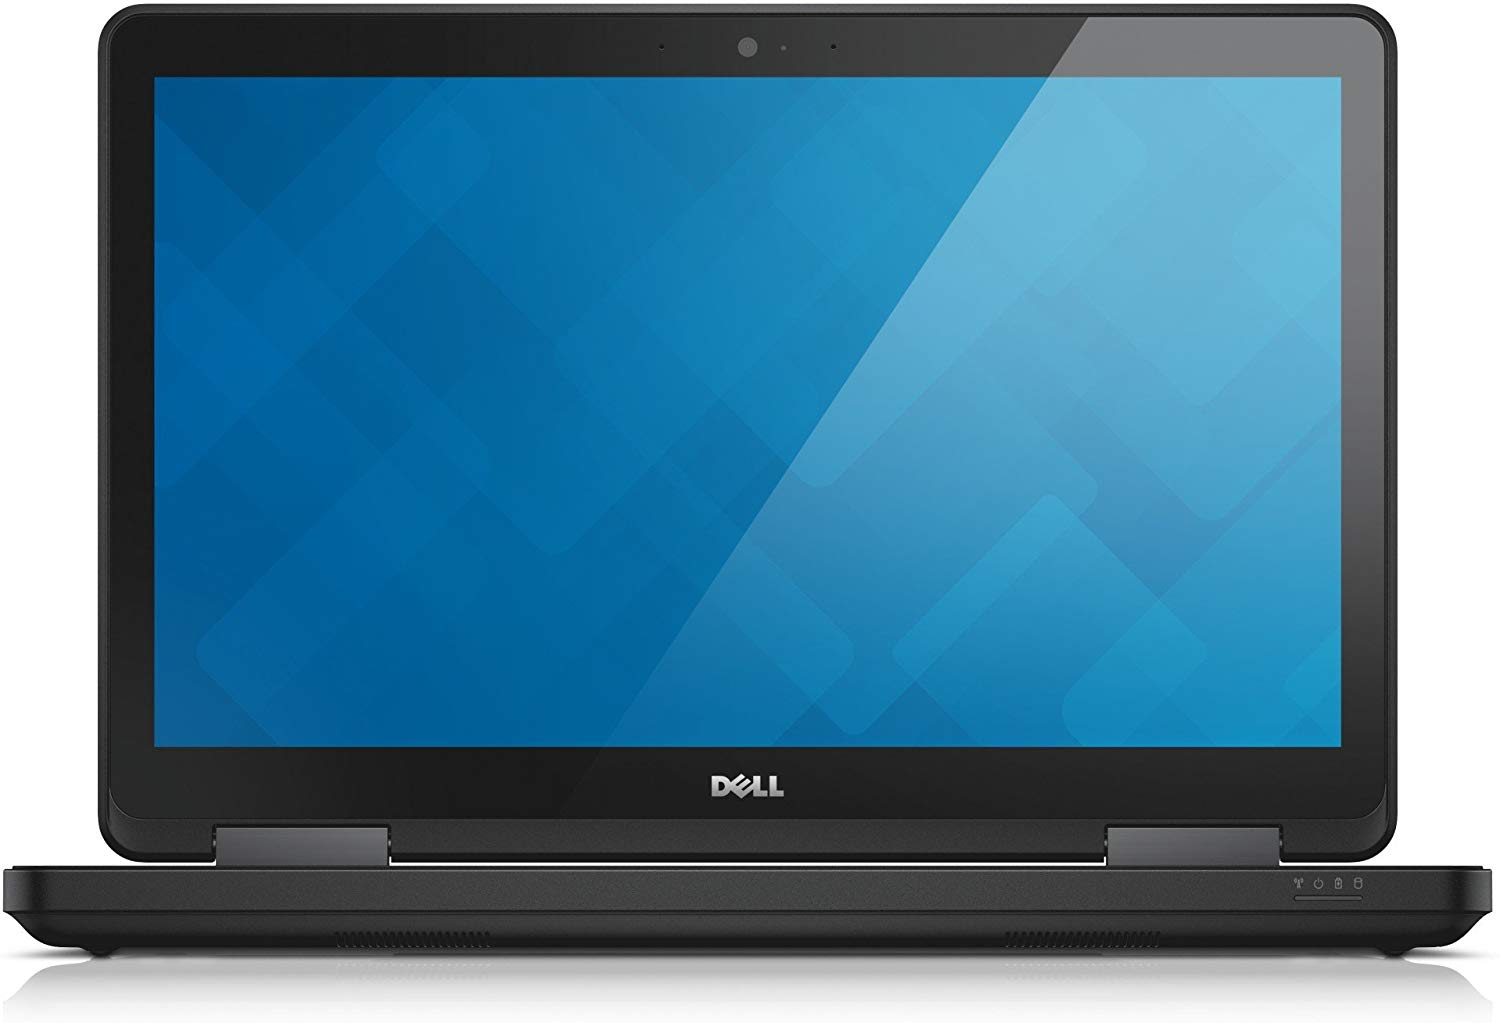 Dell Latitude E5540 Laptop Computer, 1.70 GHz Intel Core i3, 4GB DDR3 RAM, 500GB SATA Hard Drive, Windows 10 Home 64 Bit, 15" Screen (Renewed)